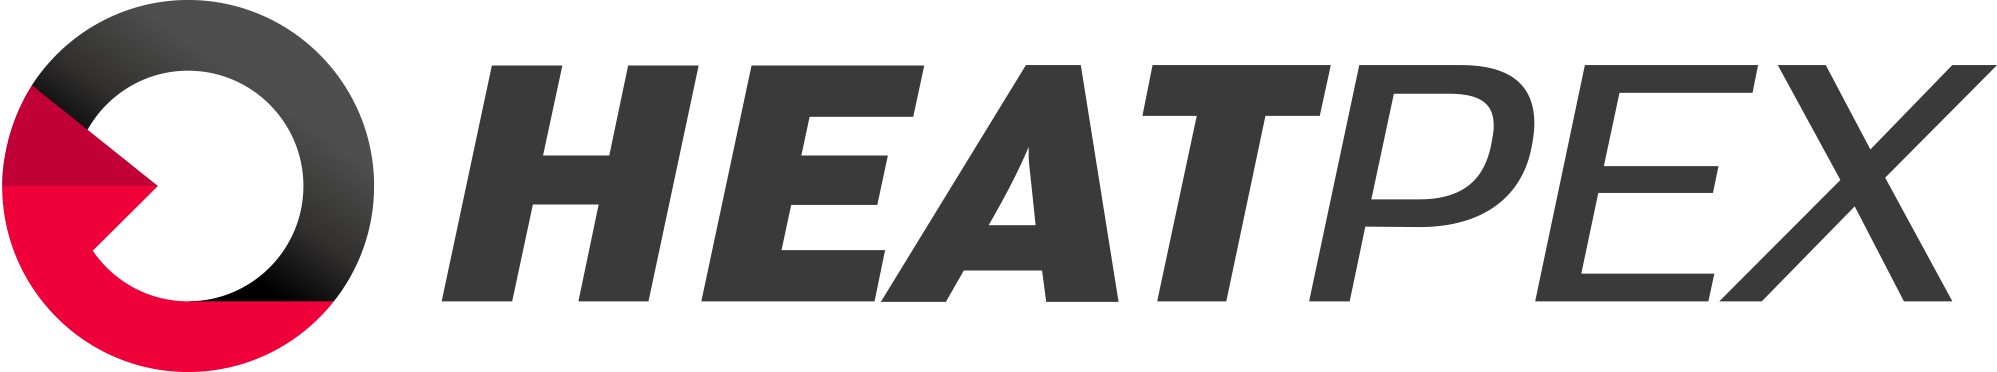 heatpex logo - ventishop.cz